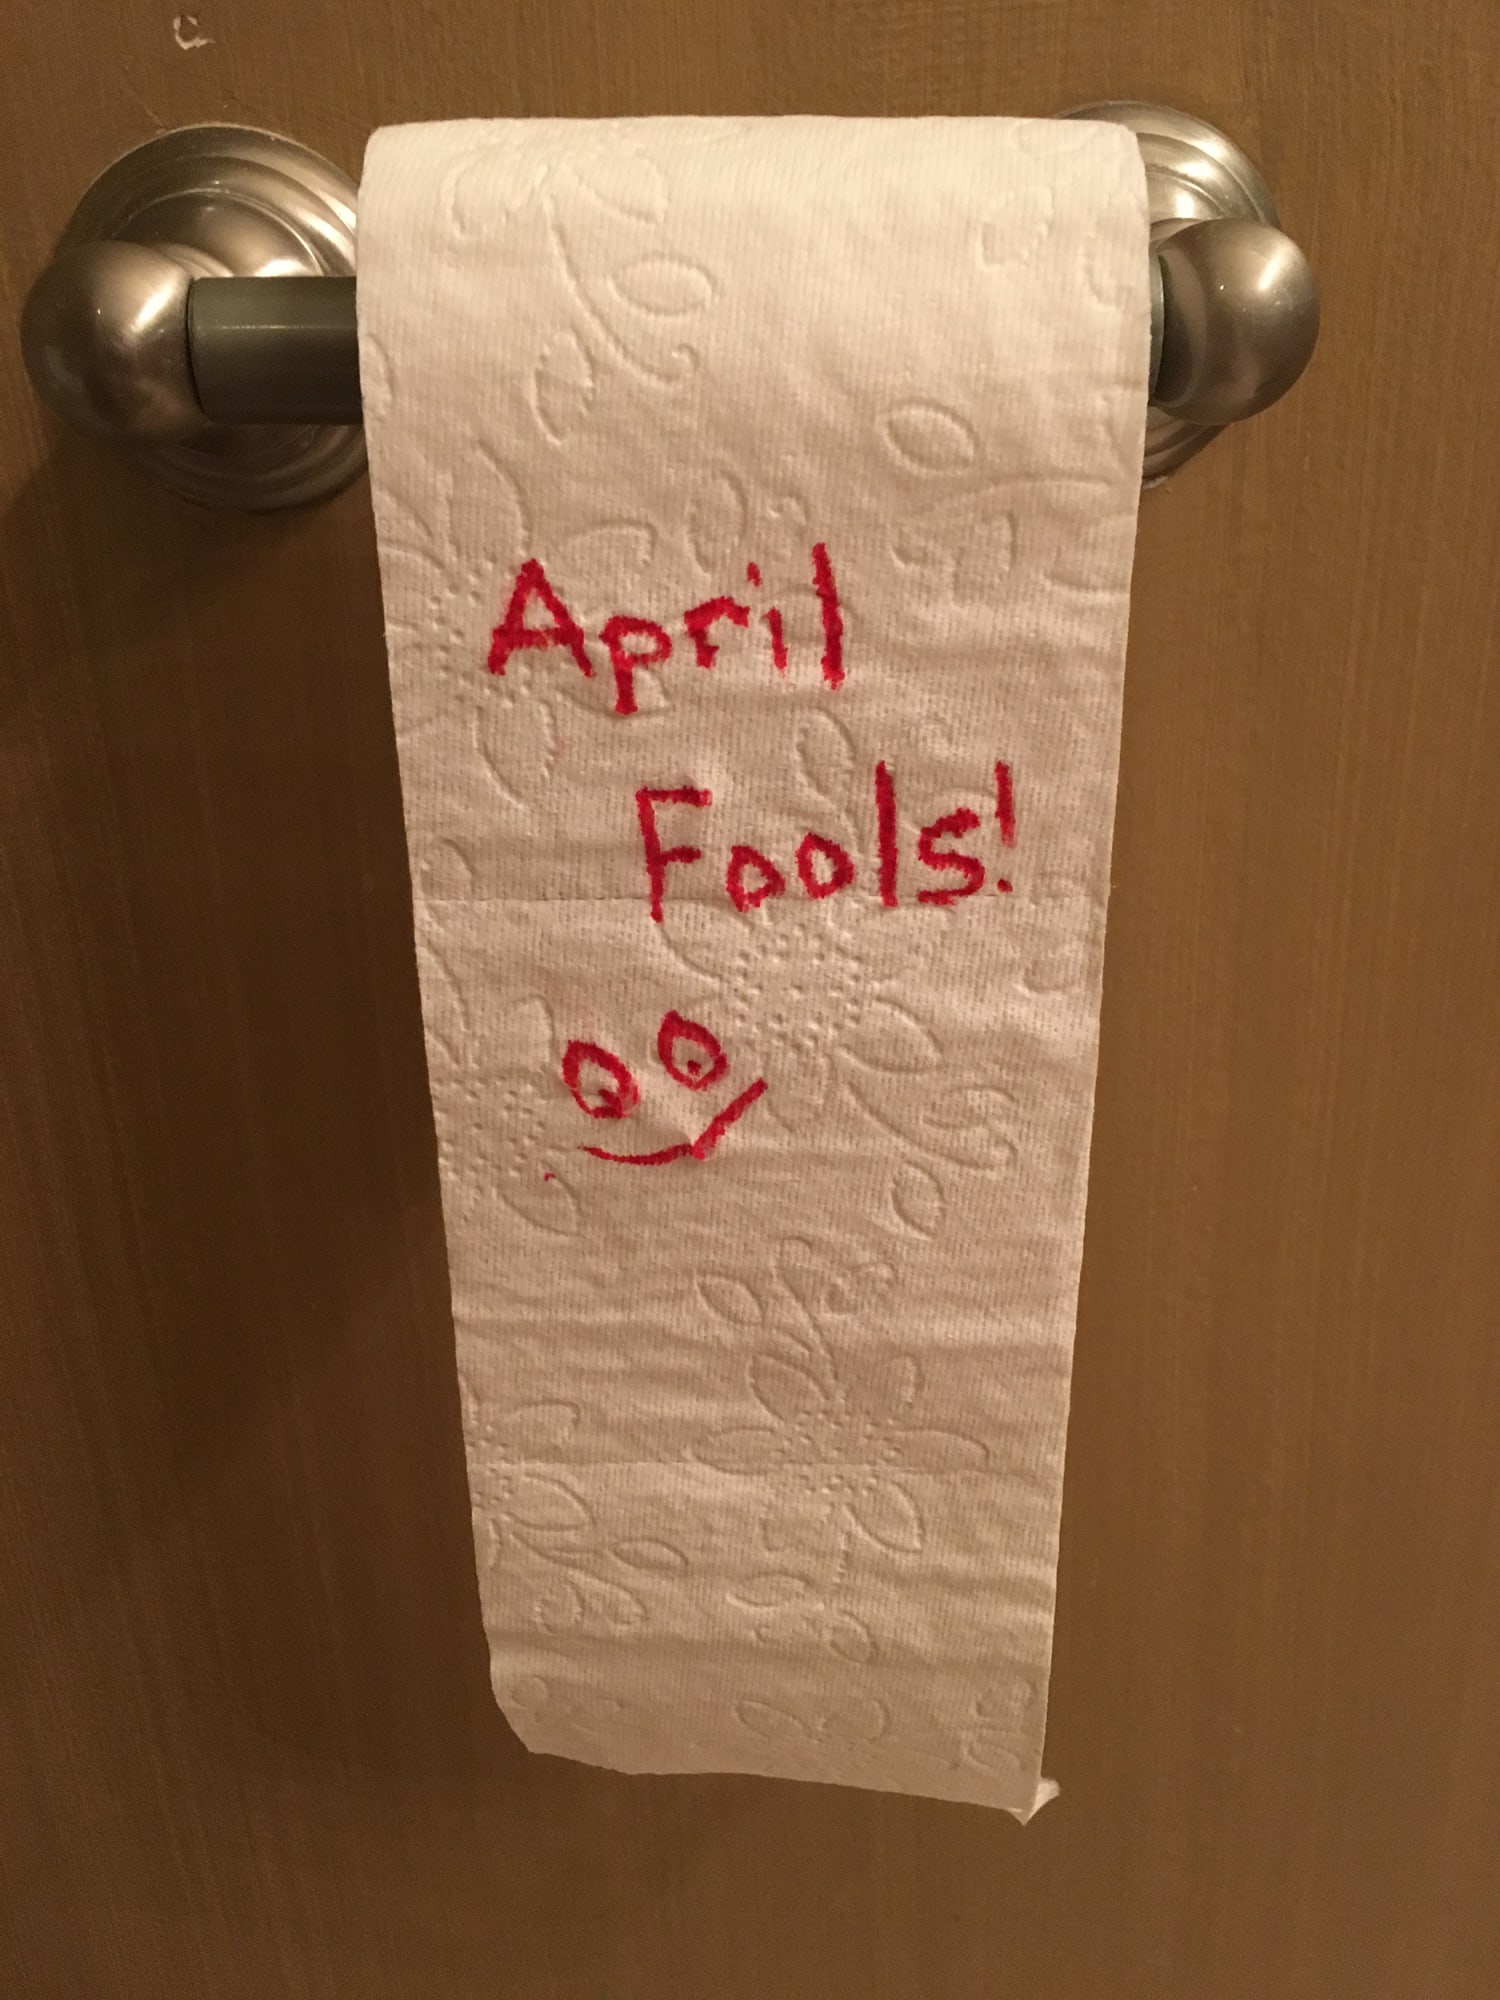 Family-friendly April Fools' Day pranks for kids